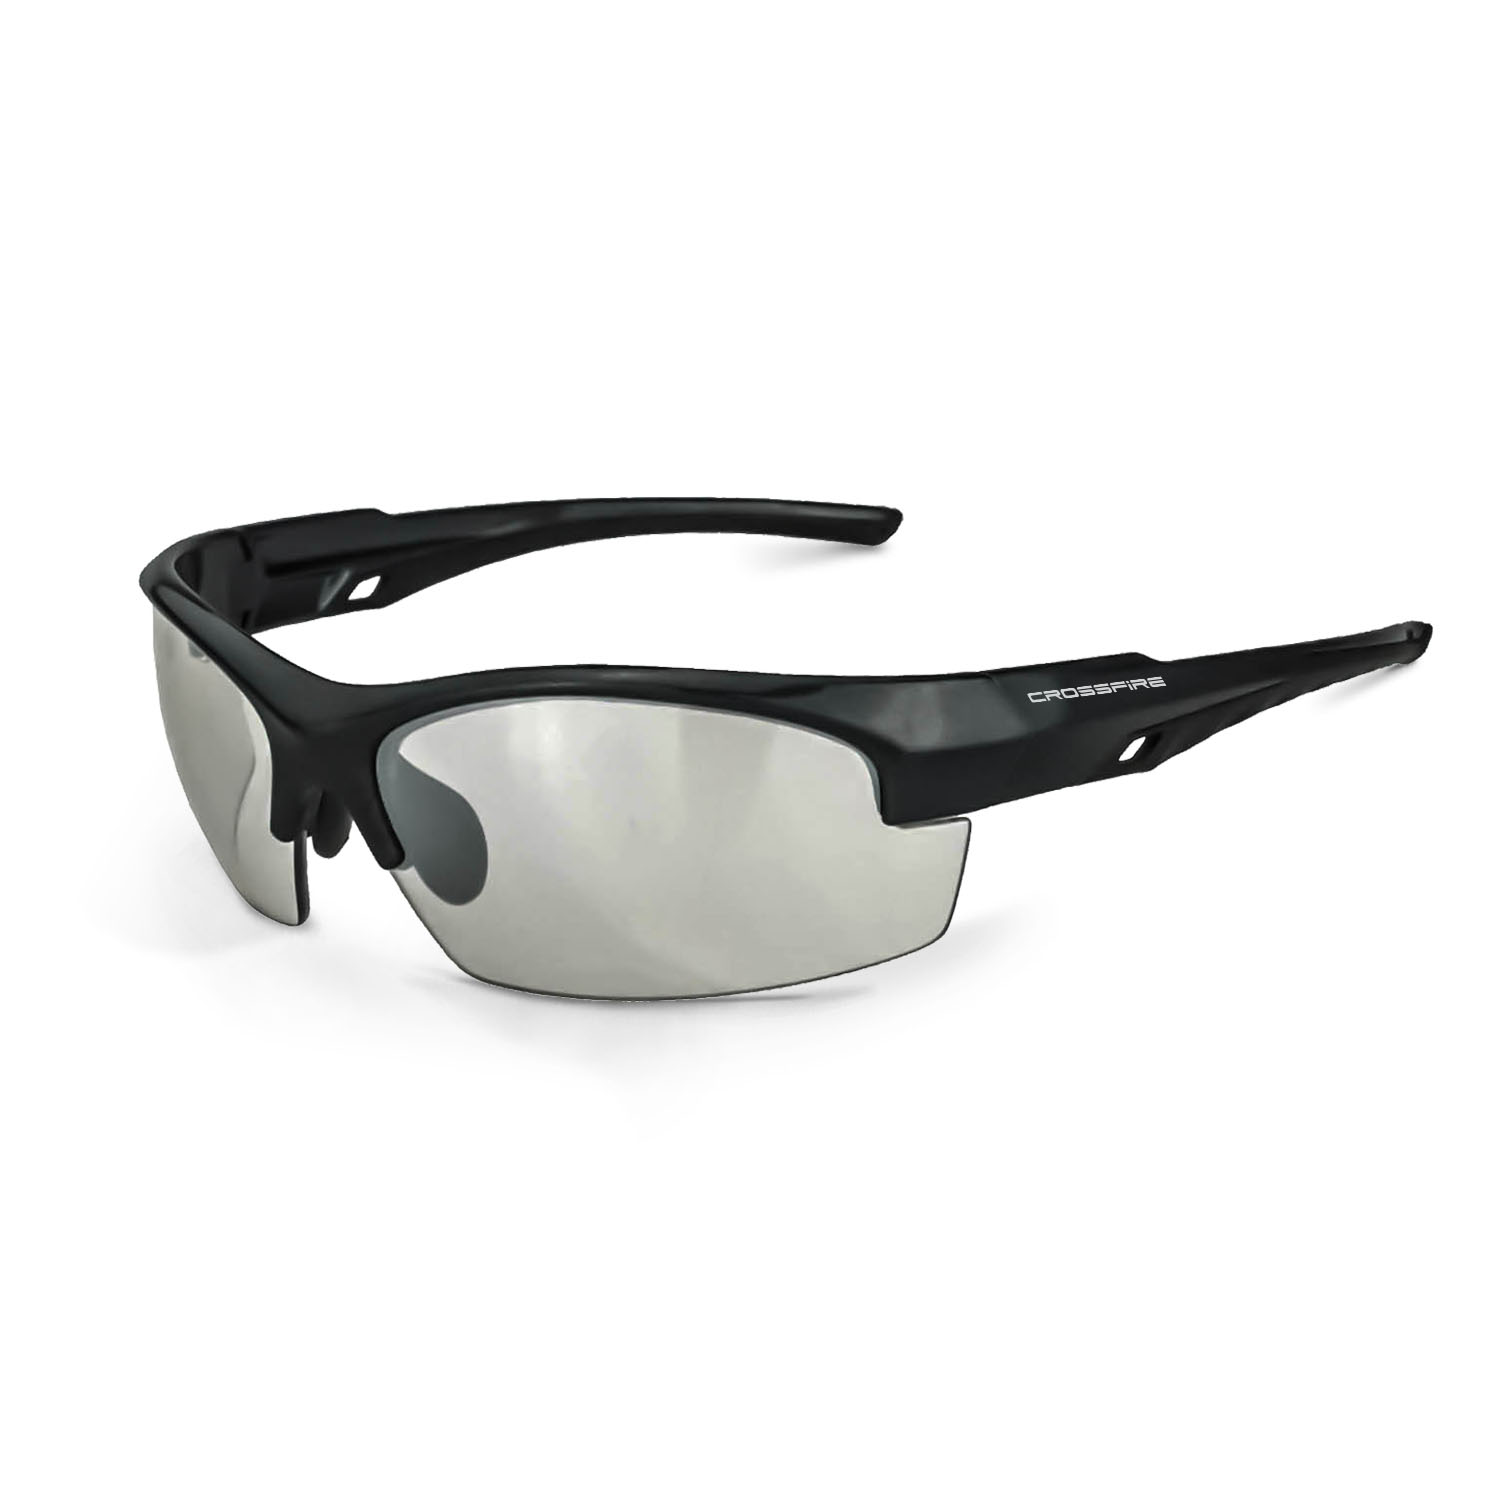 Crucible Premium Safety Eyewear - Shiny Black Frame - Indoor/Outdoor Lens